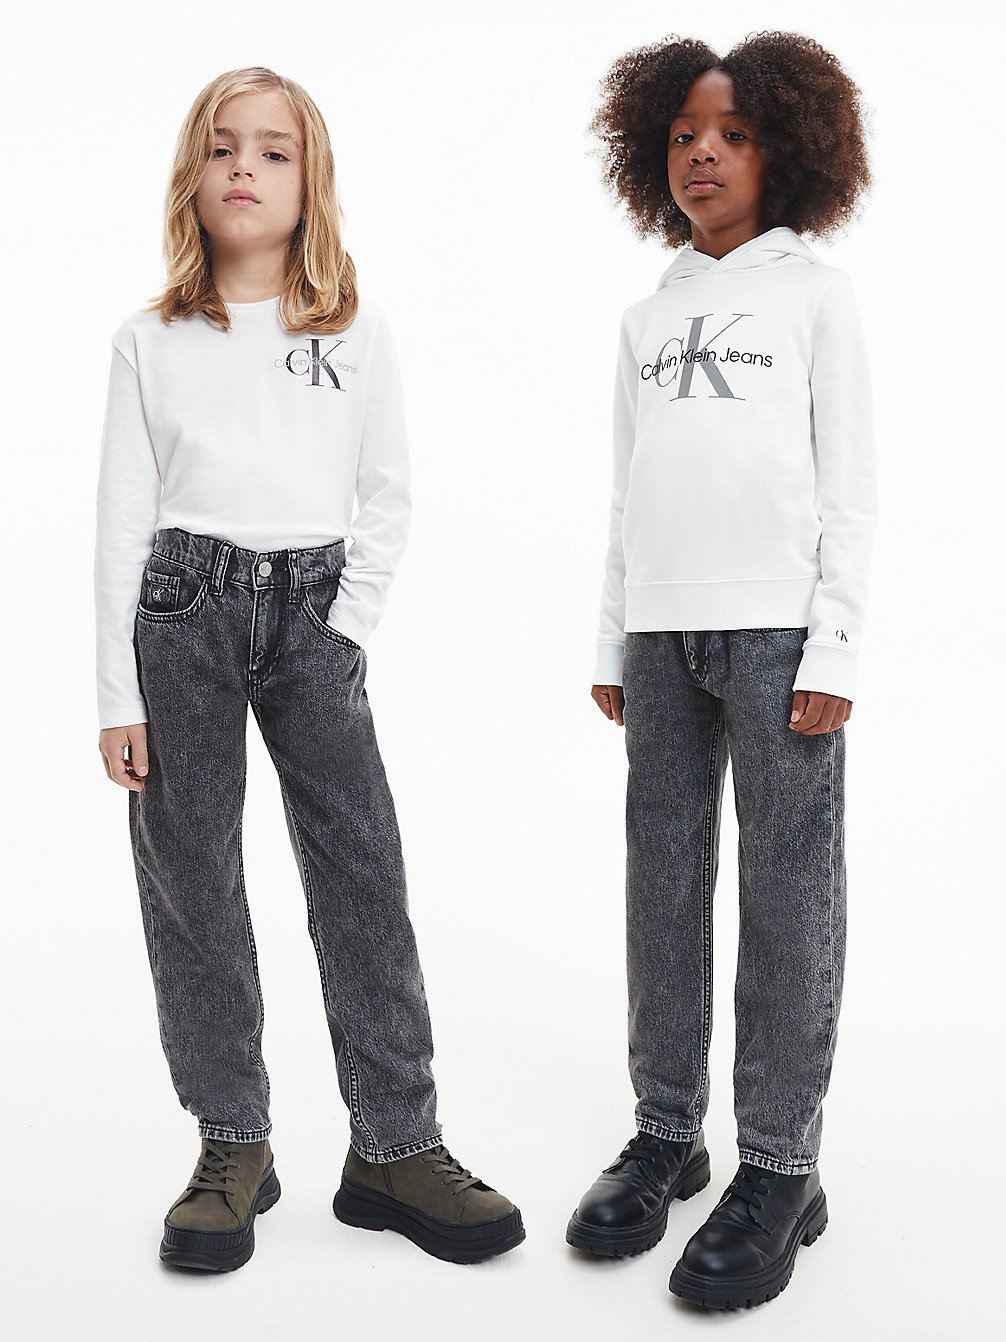 Unisex Mid Rise Straight Jeans > STONE GREY WASH > undefined kids unisex > Calvin Klein